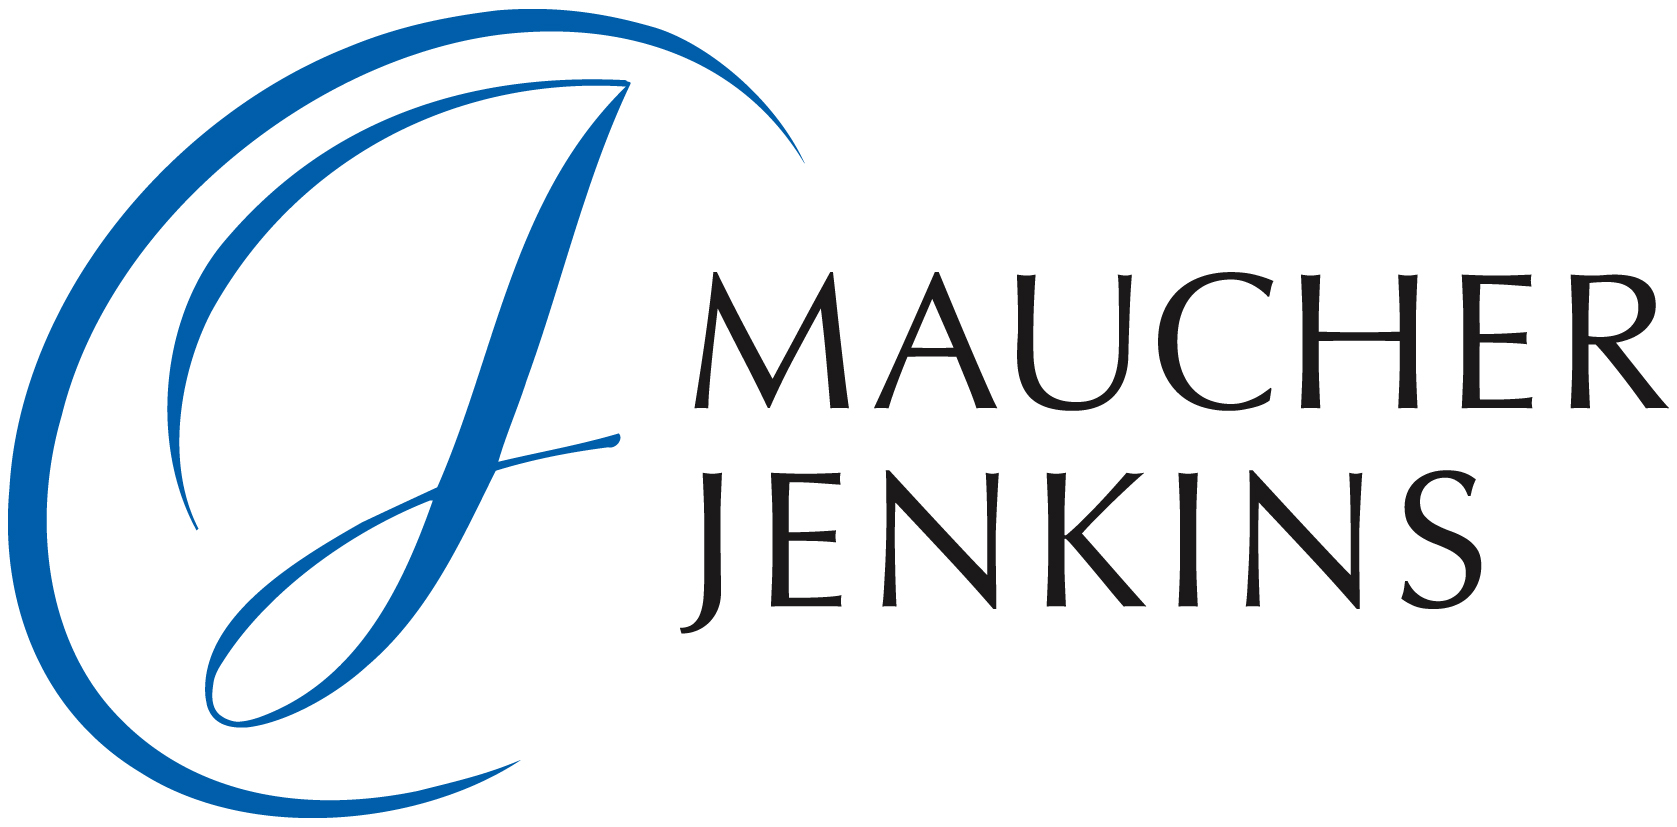 Logo Maucher Jenkins